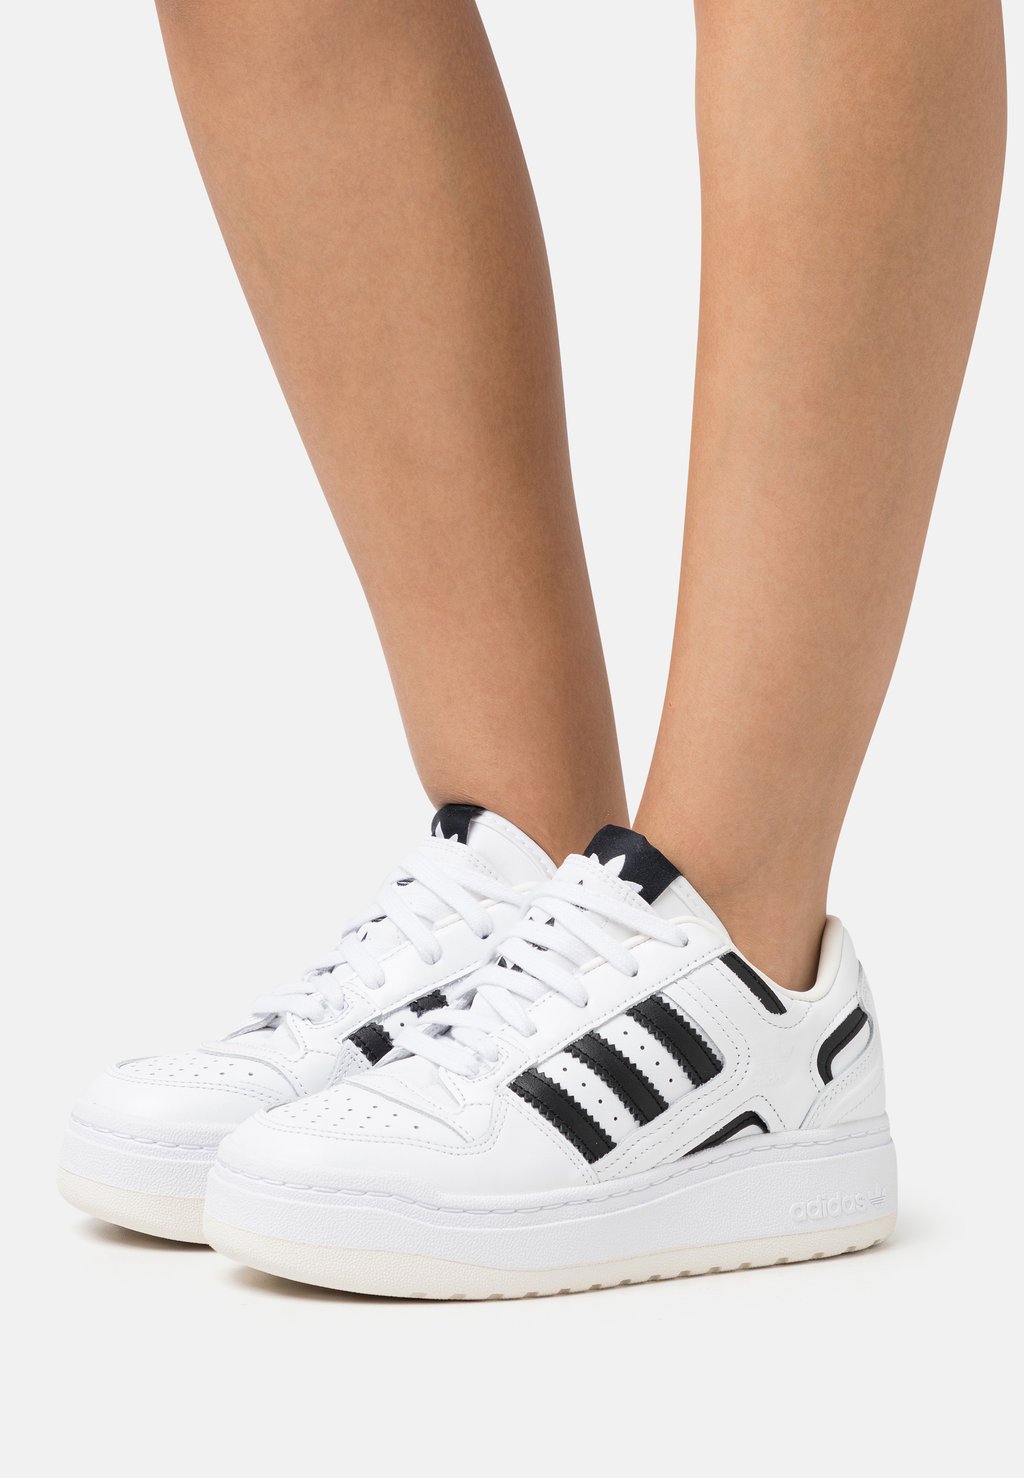 Кроссовки adidas Originals кроссовки adidas own the game 2 0 basketball shoes цвет footwear white footwear white core black